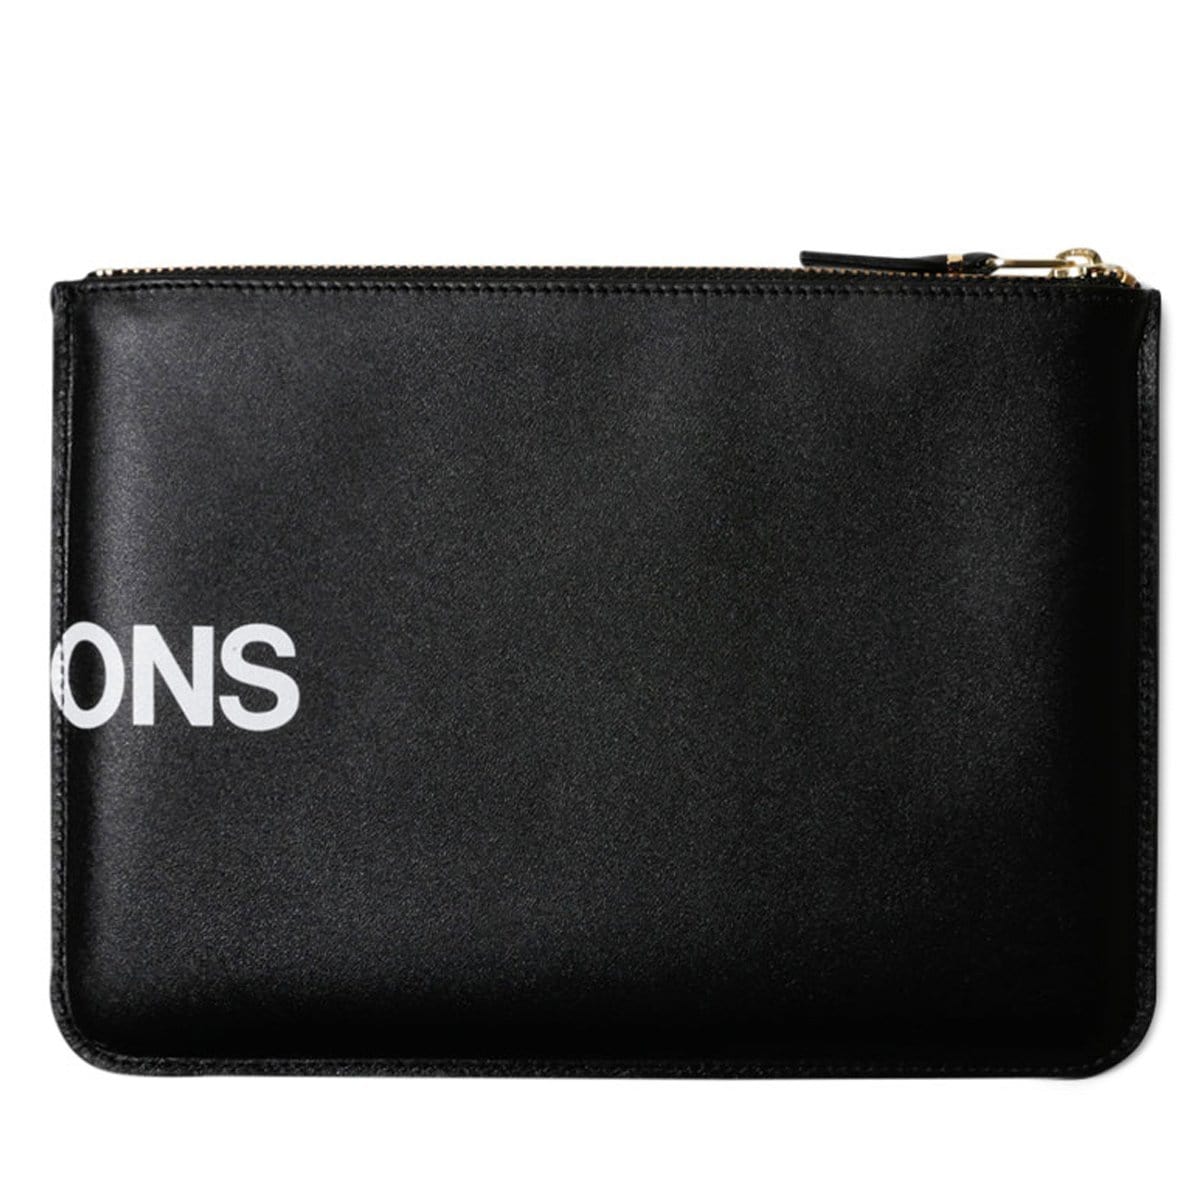 Comme Des Garçons Wallet Bags & Accessories BLACK / O/S HUGE LOGO WALLET